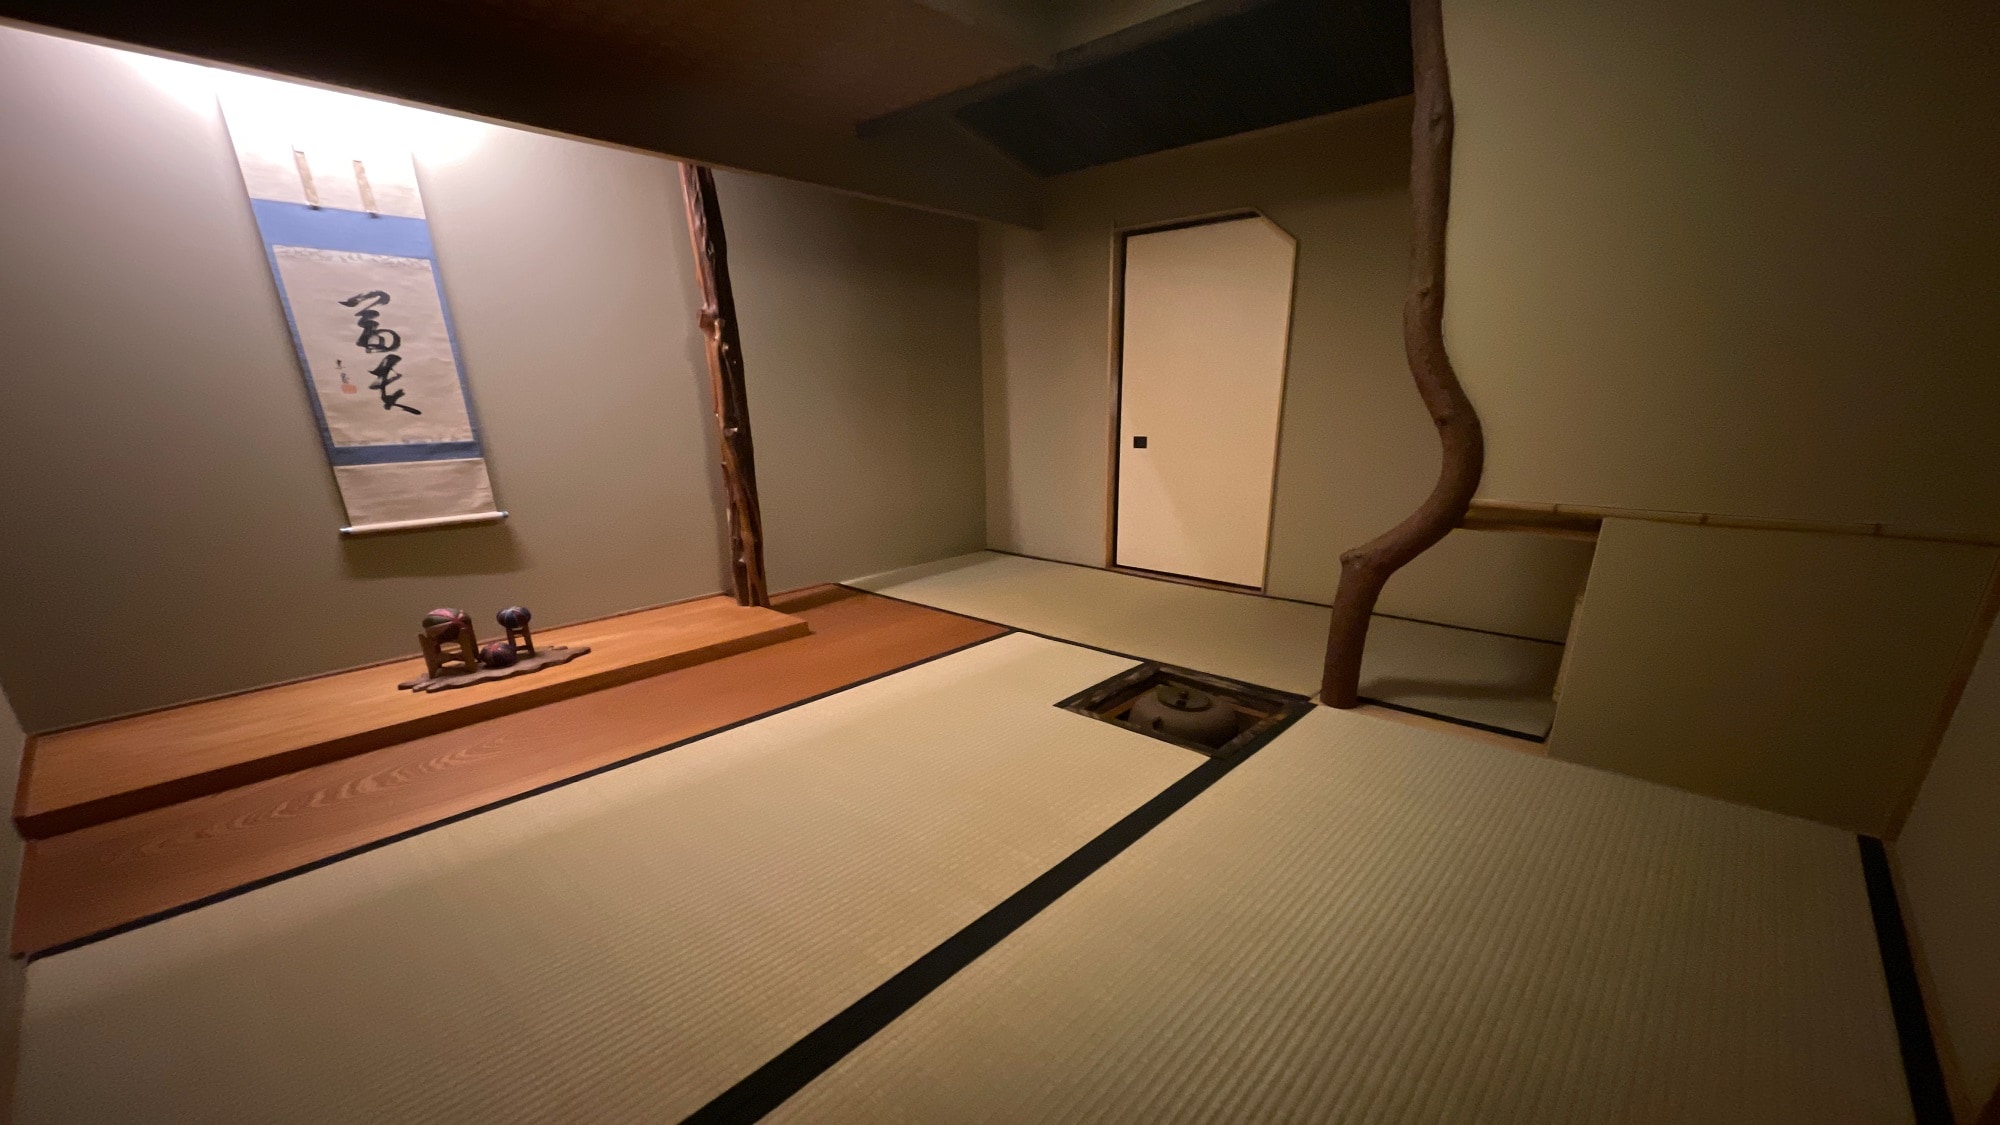 Special room "Genyo" tea room 3.5 tatami mats